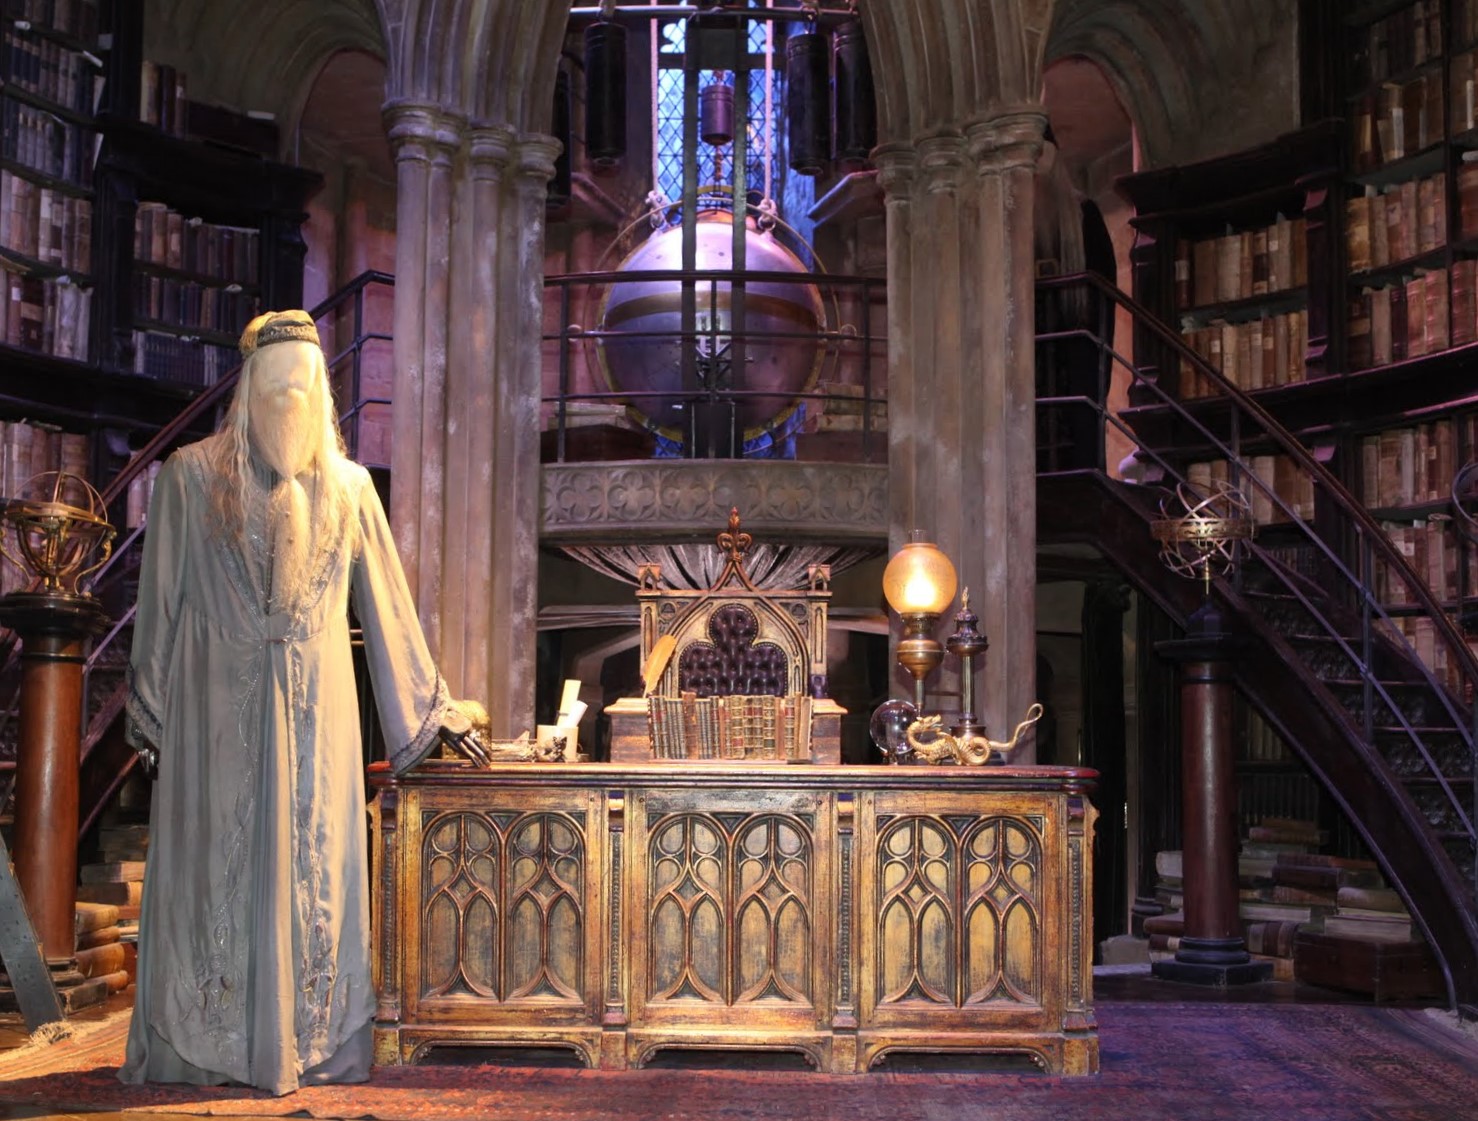 headteachers: Dumbledore in his office